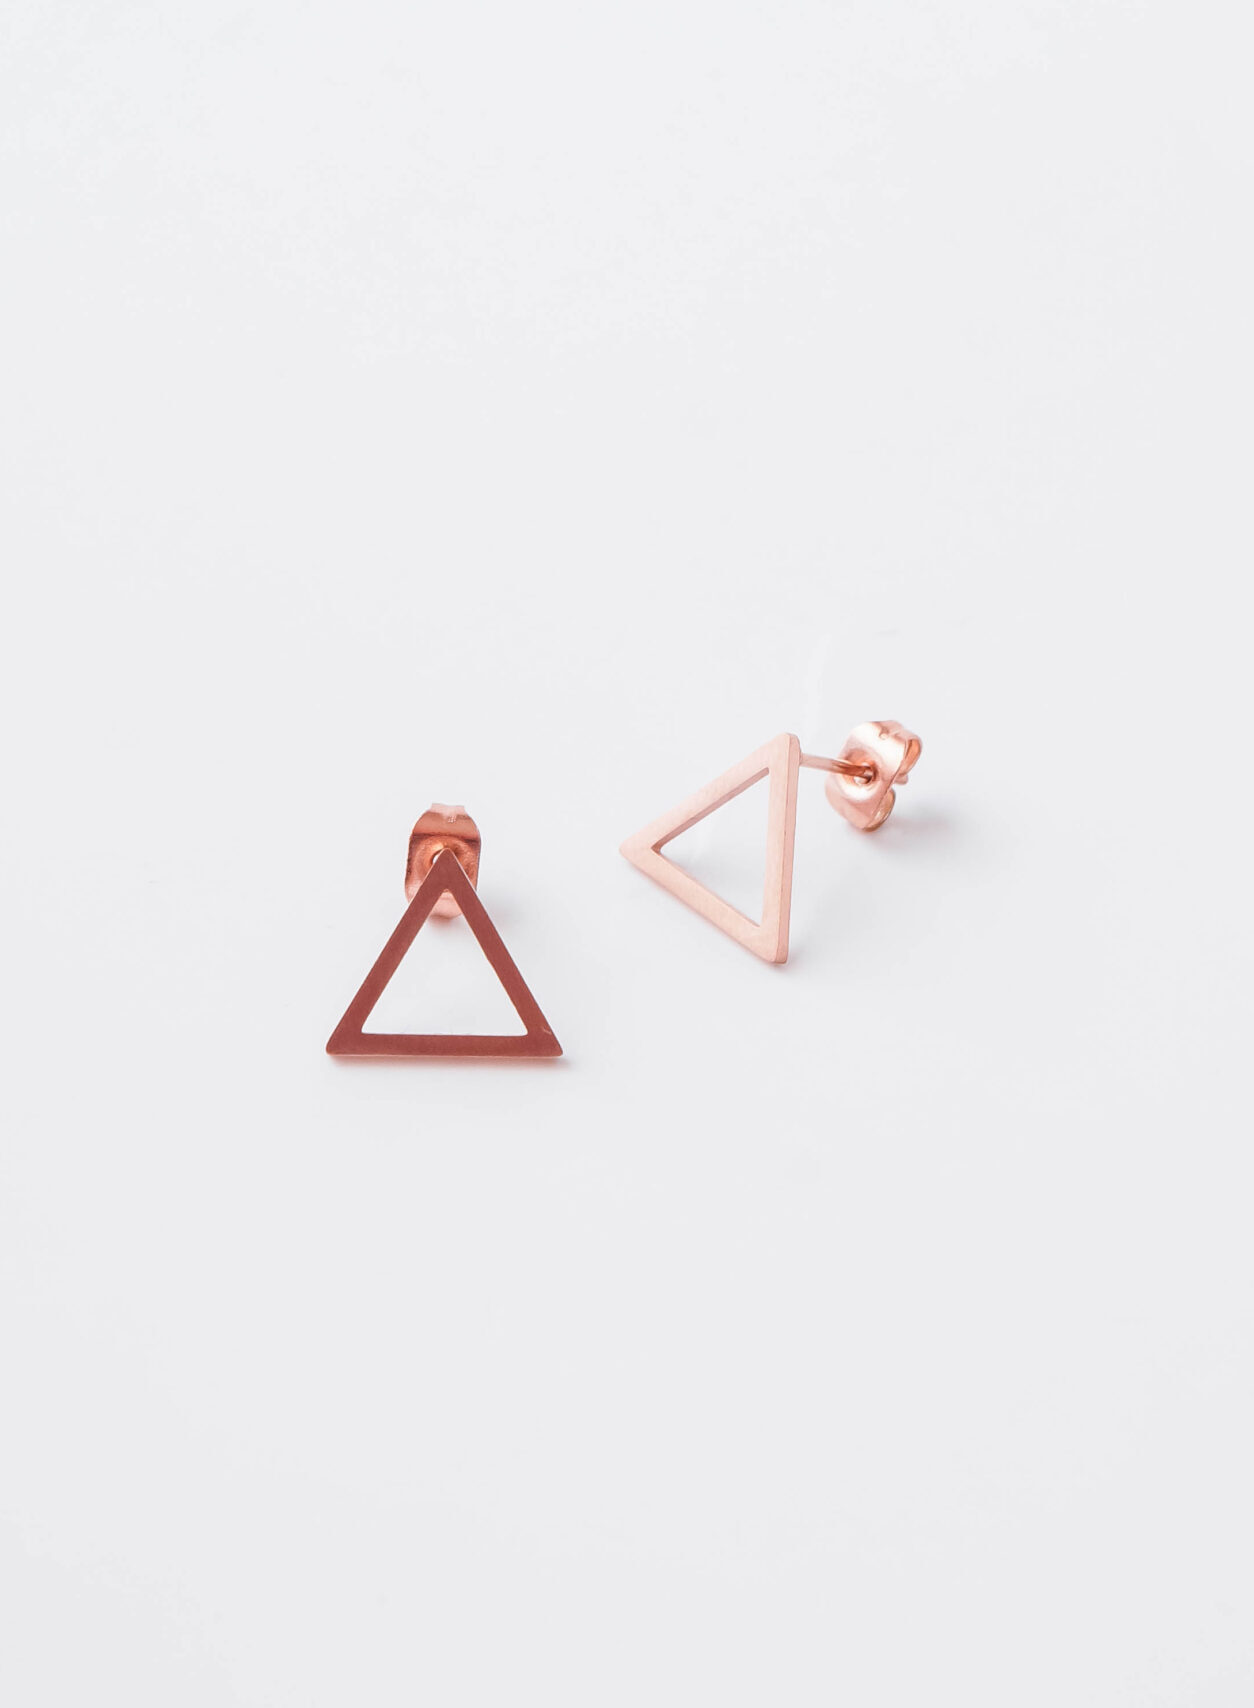 Minimalist triangle earrings -GG Unique